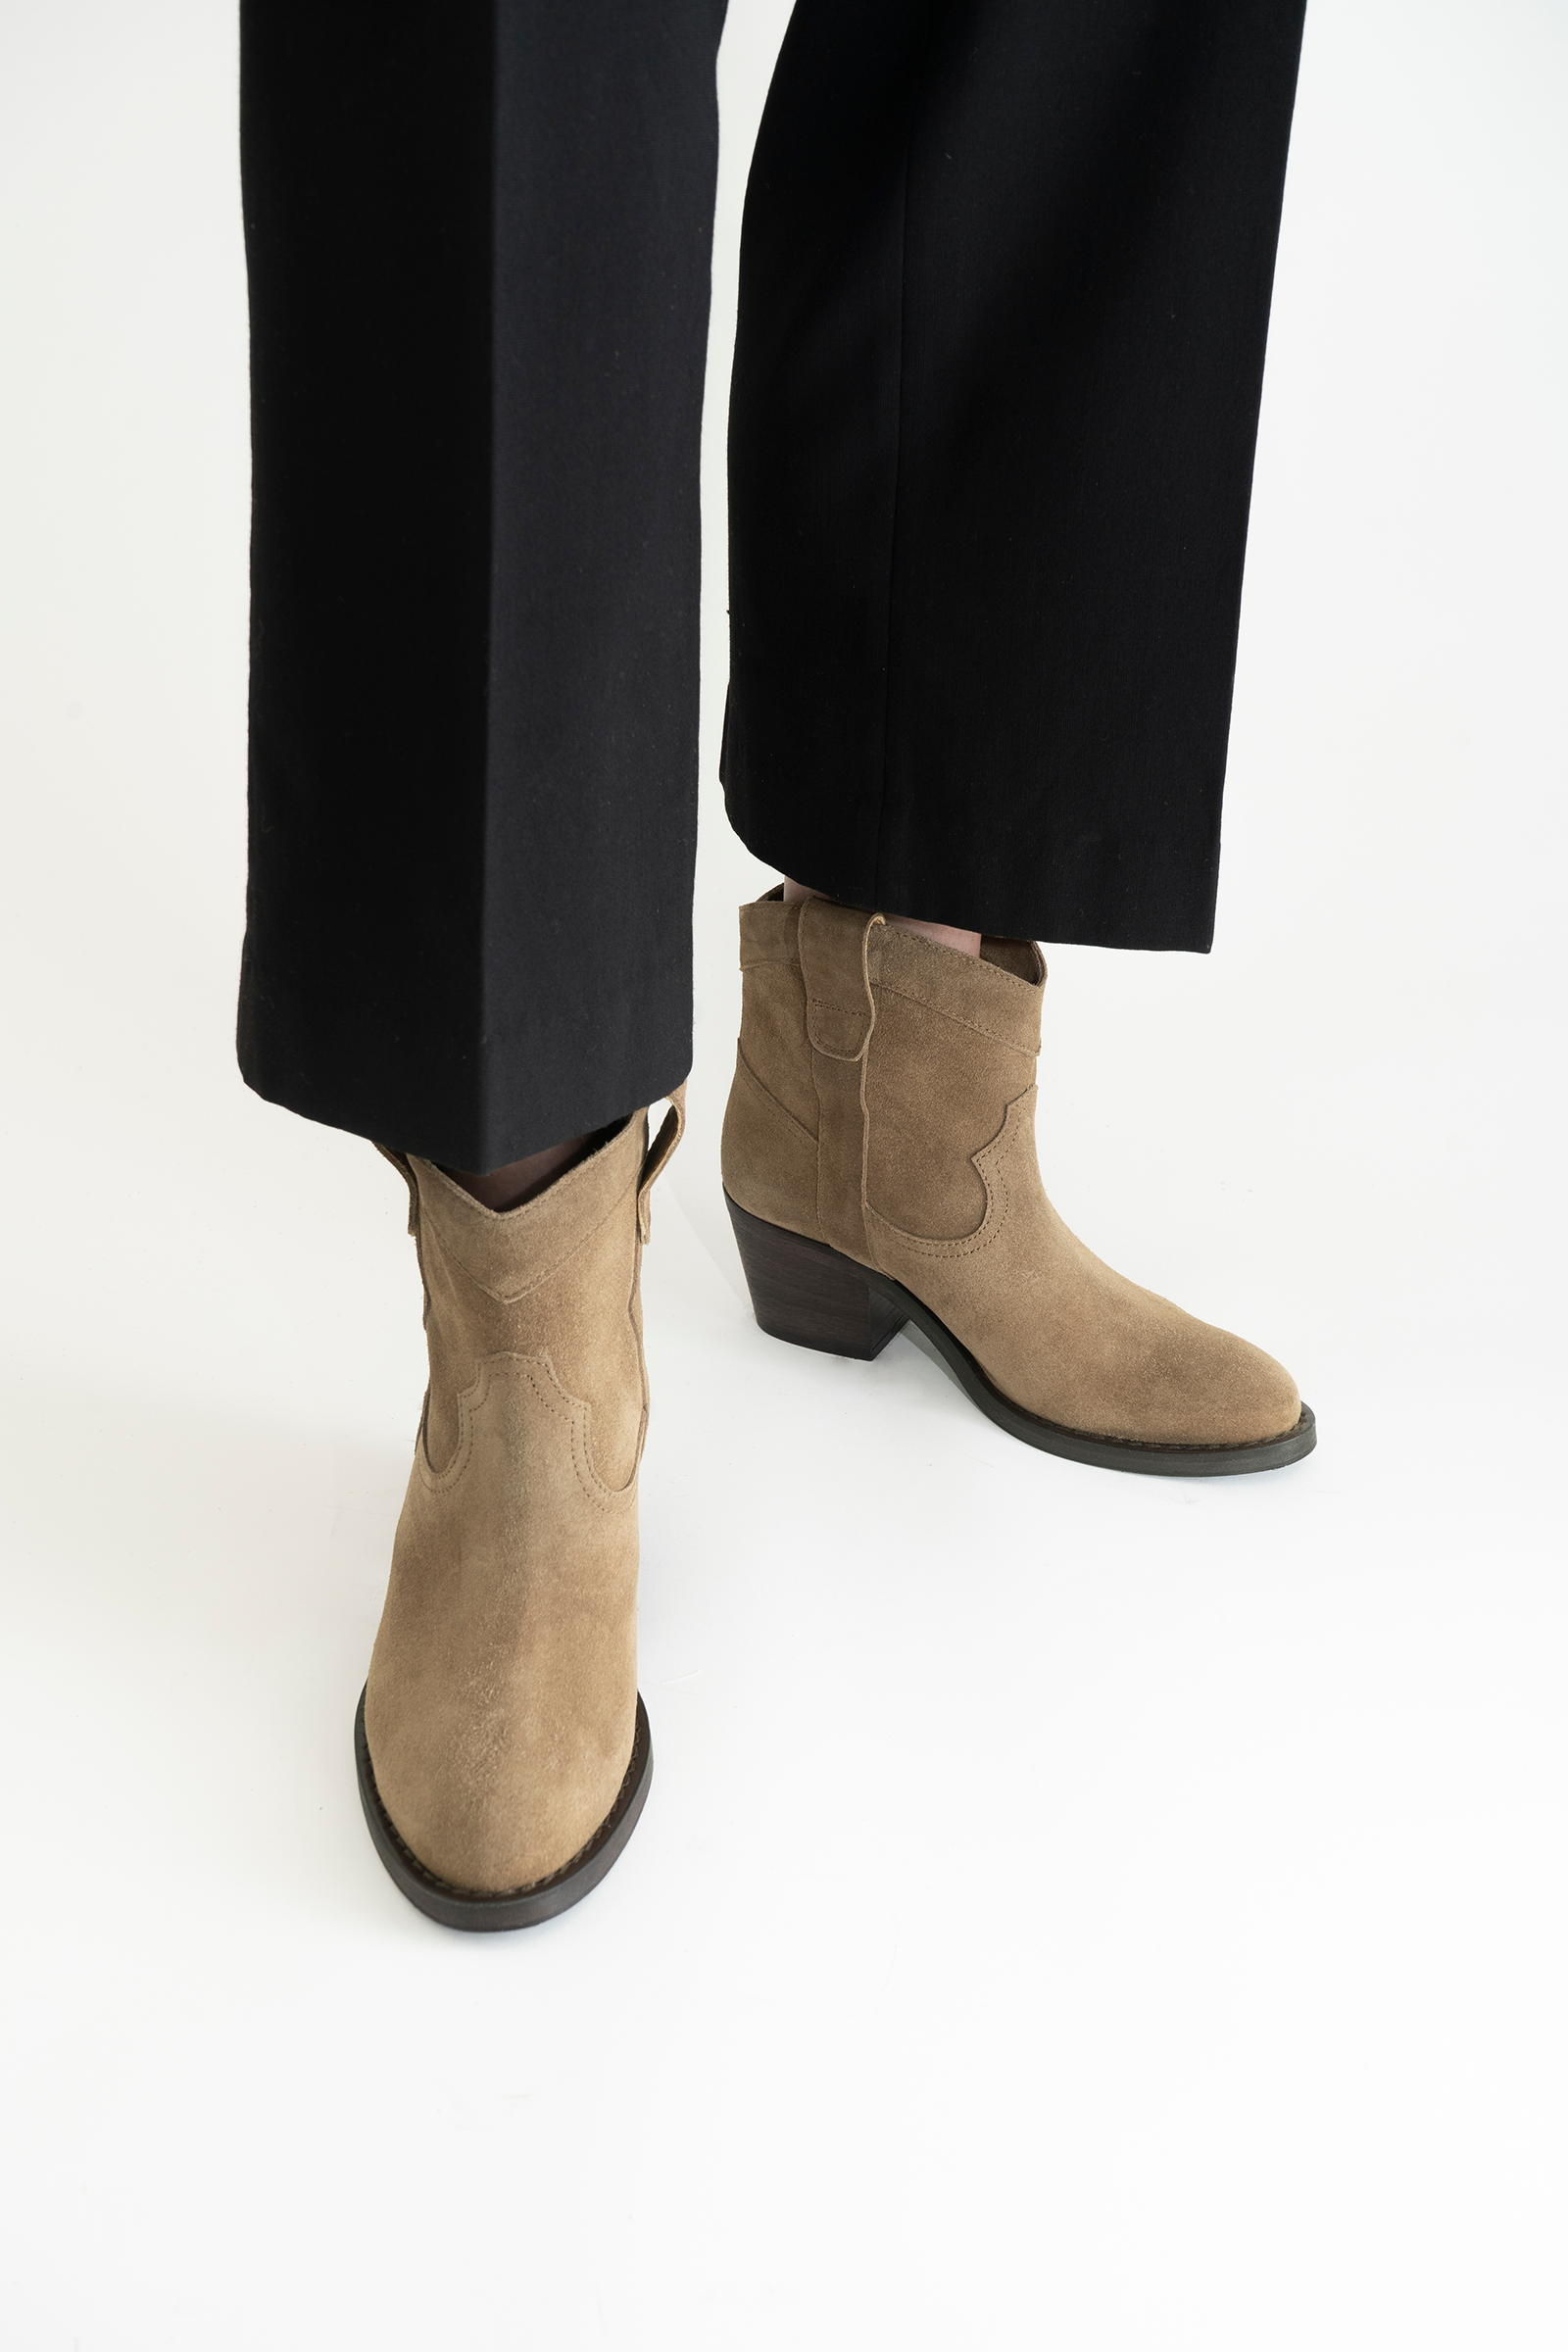 Annika boots, camel suede